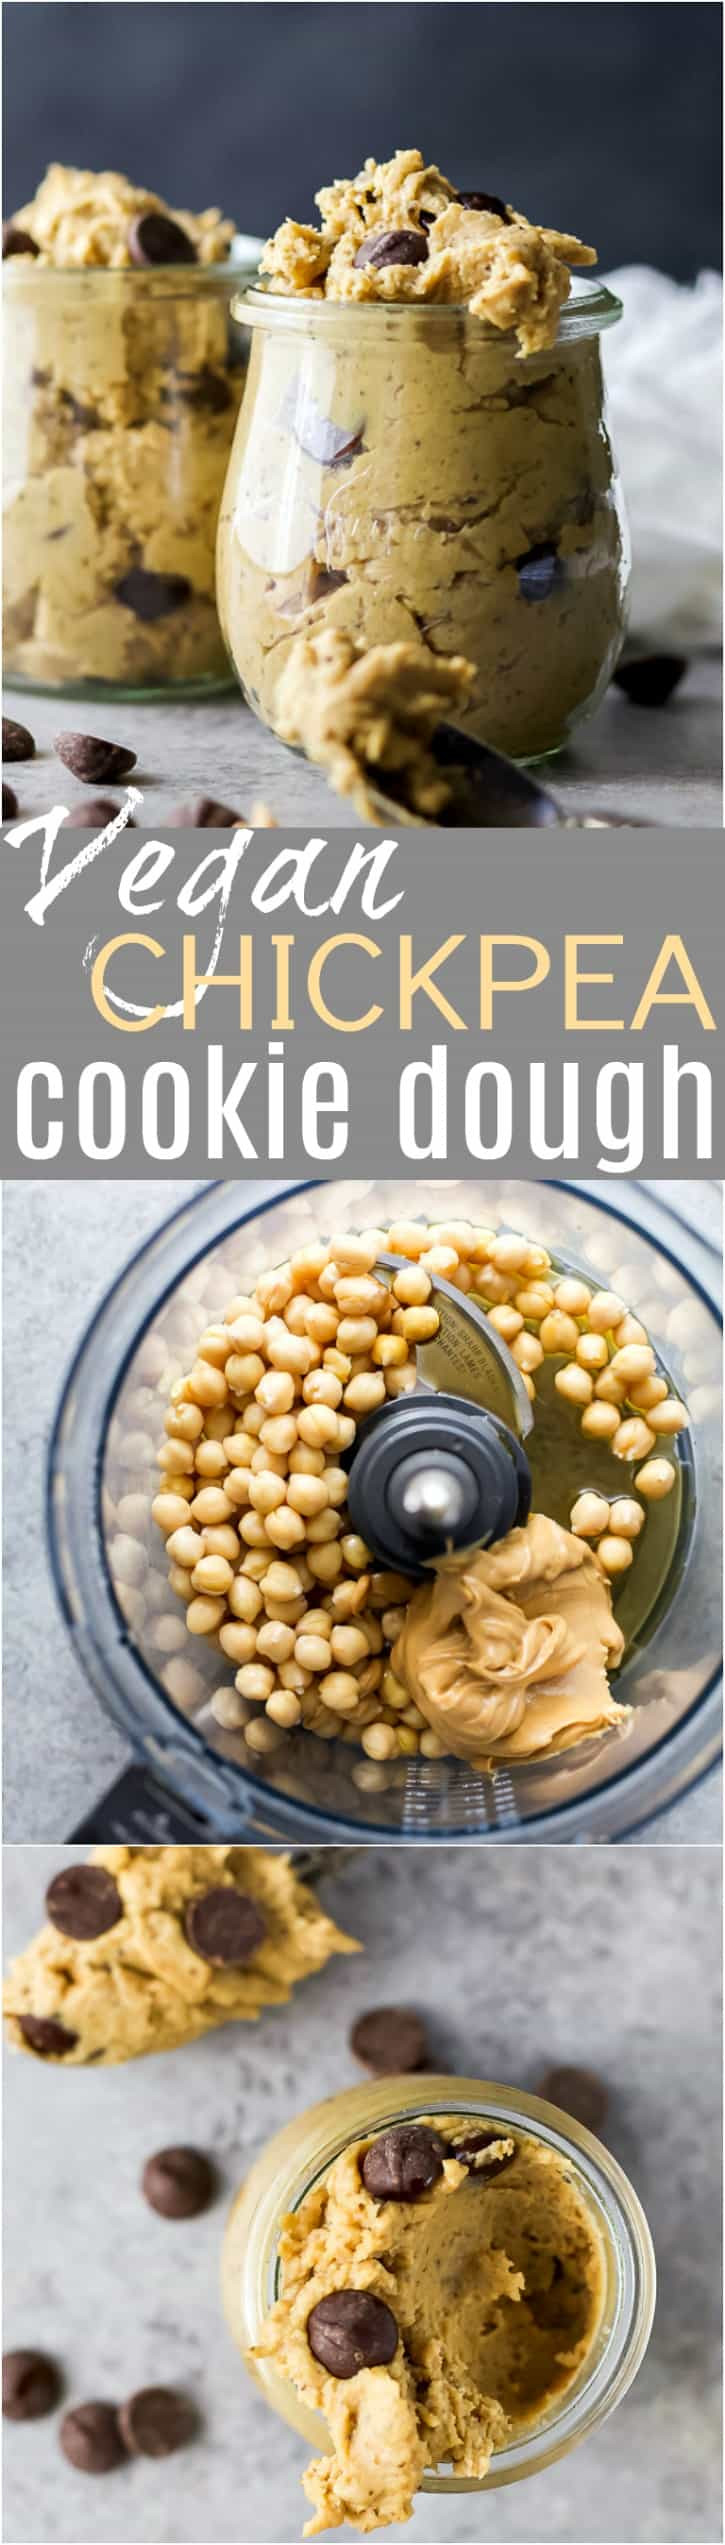 Vegan Cookie Dough Recipes
 Vegan Chickpea Cookie Dough